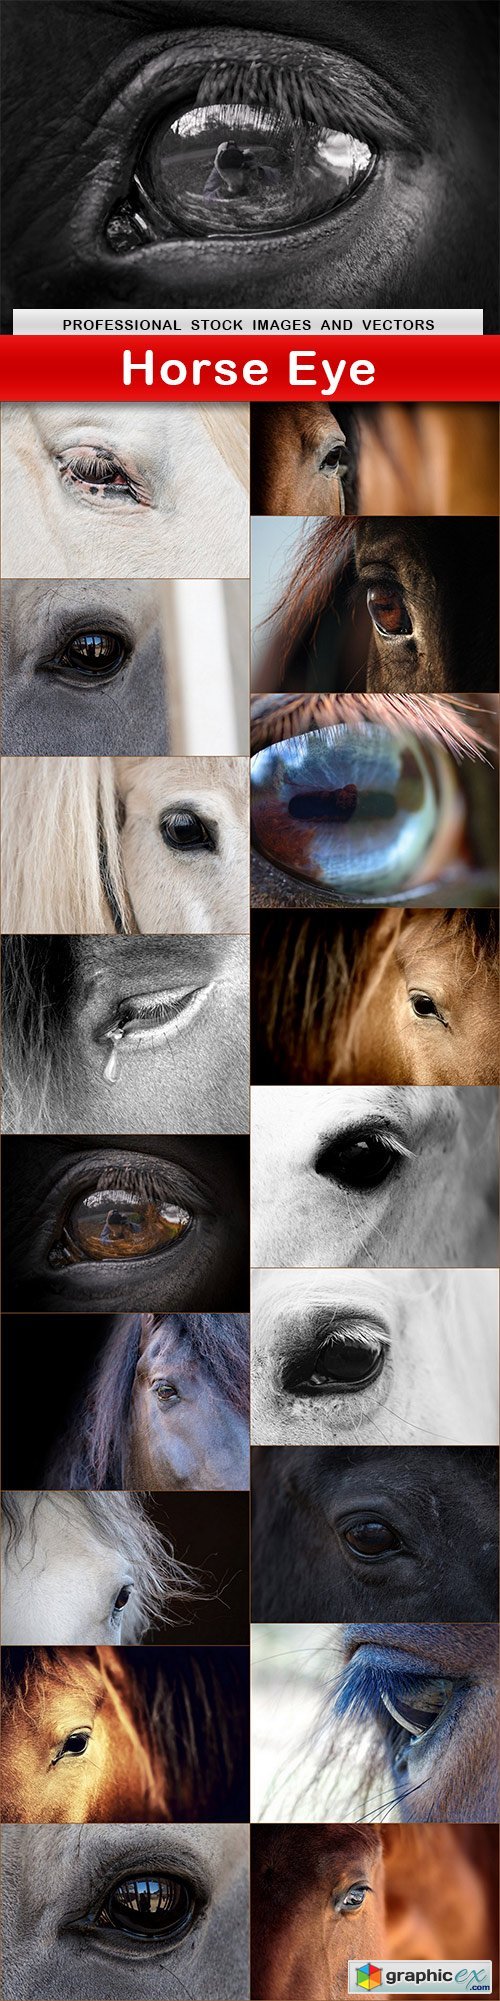 Horse Eye - 19 UHQ JPEG